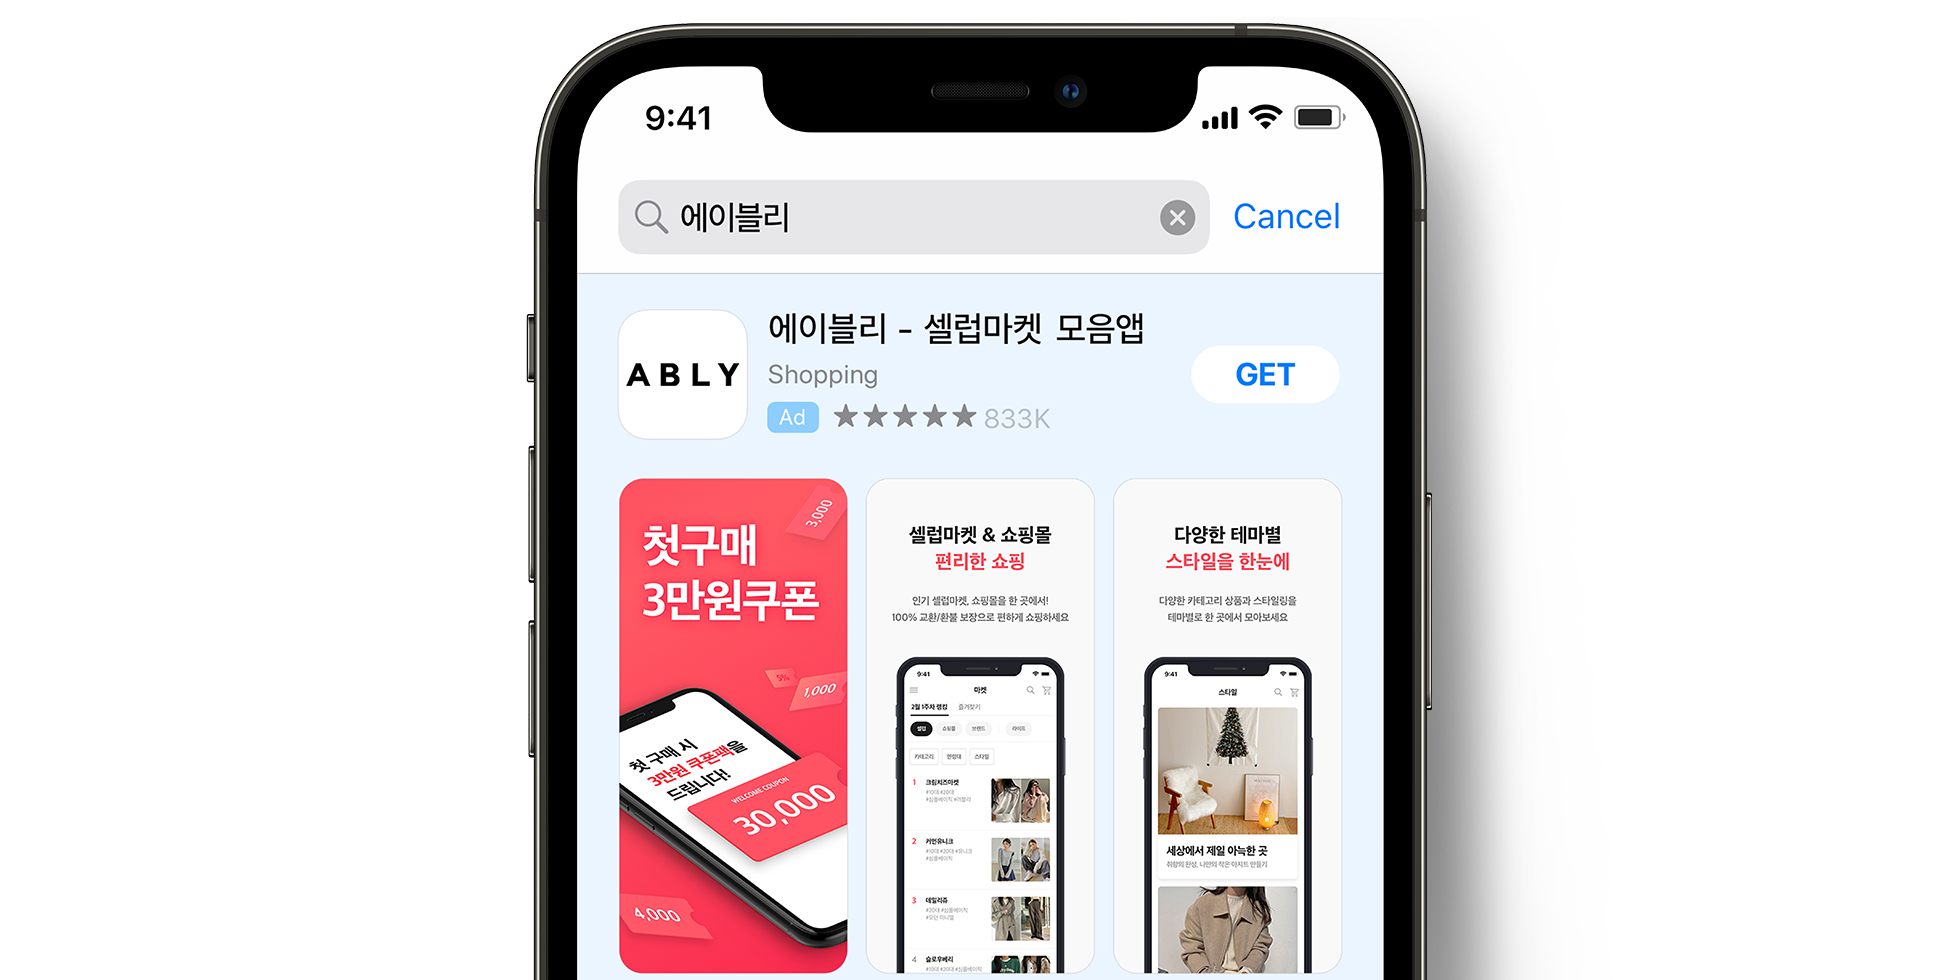 ABLY-Anzeige im App Store